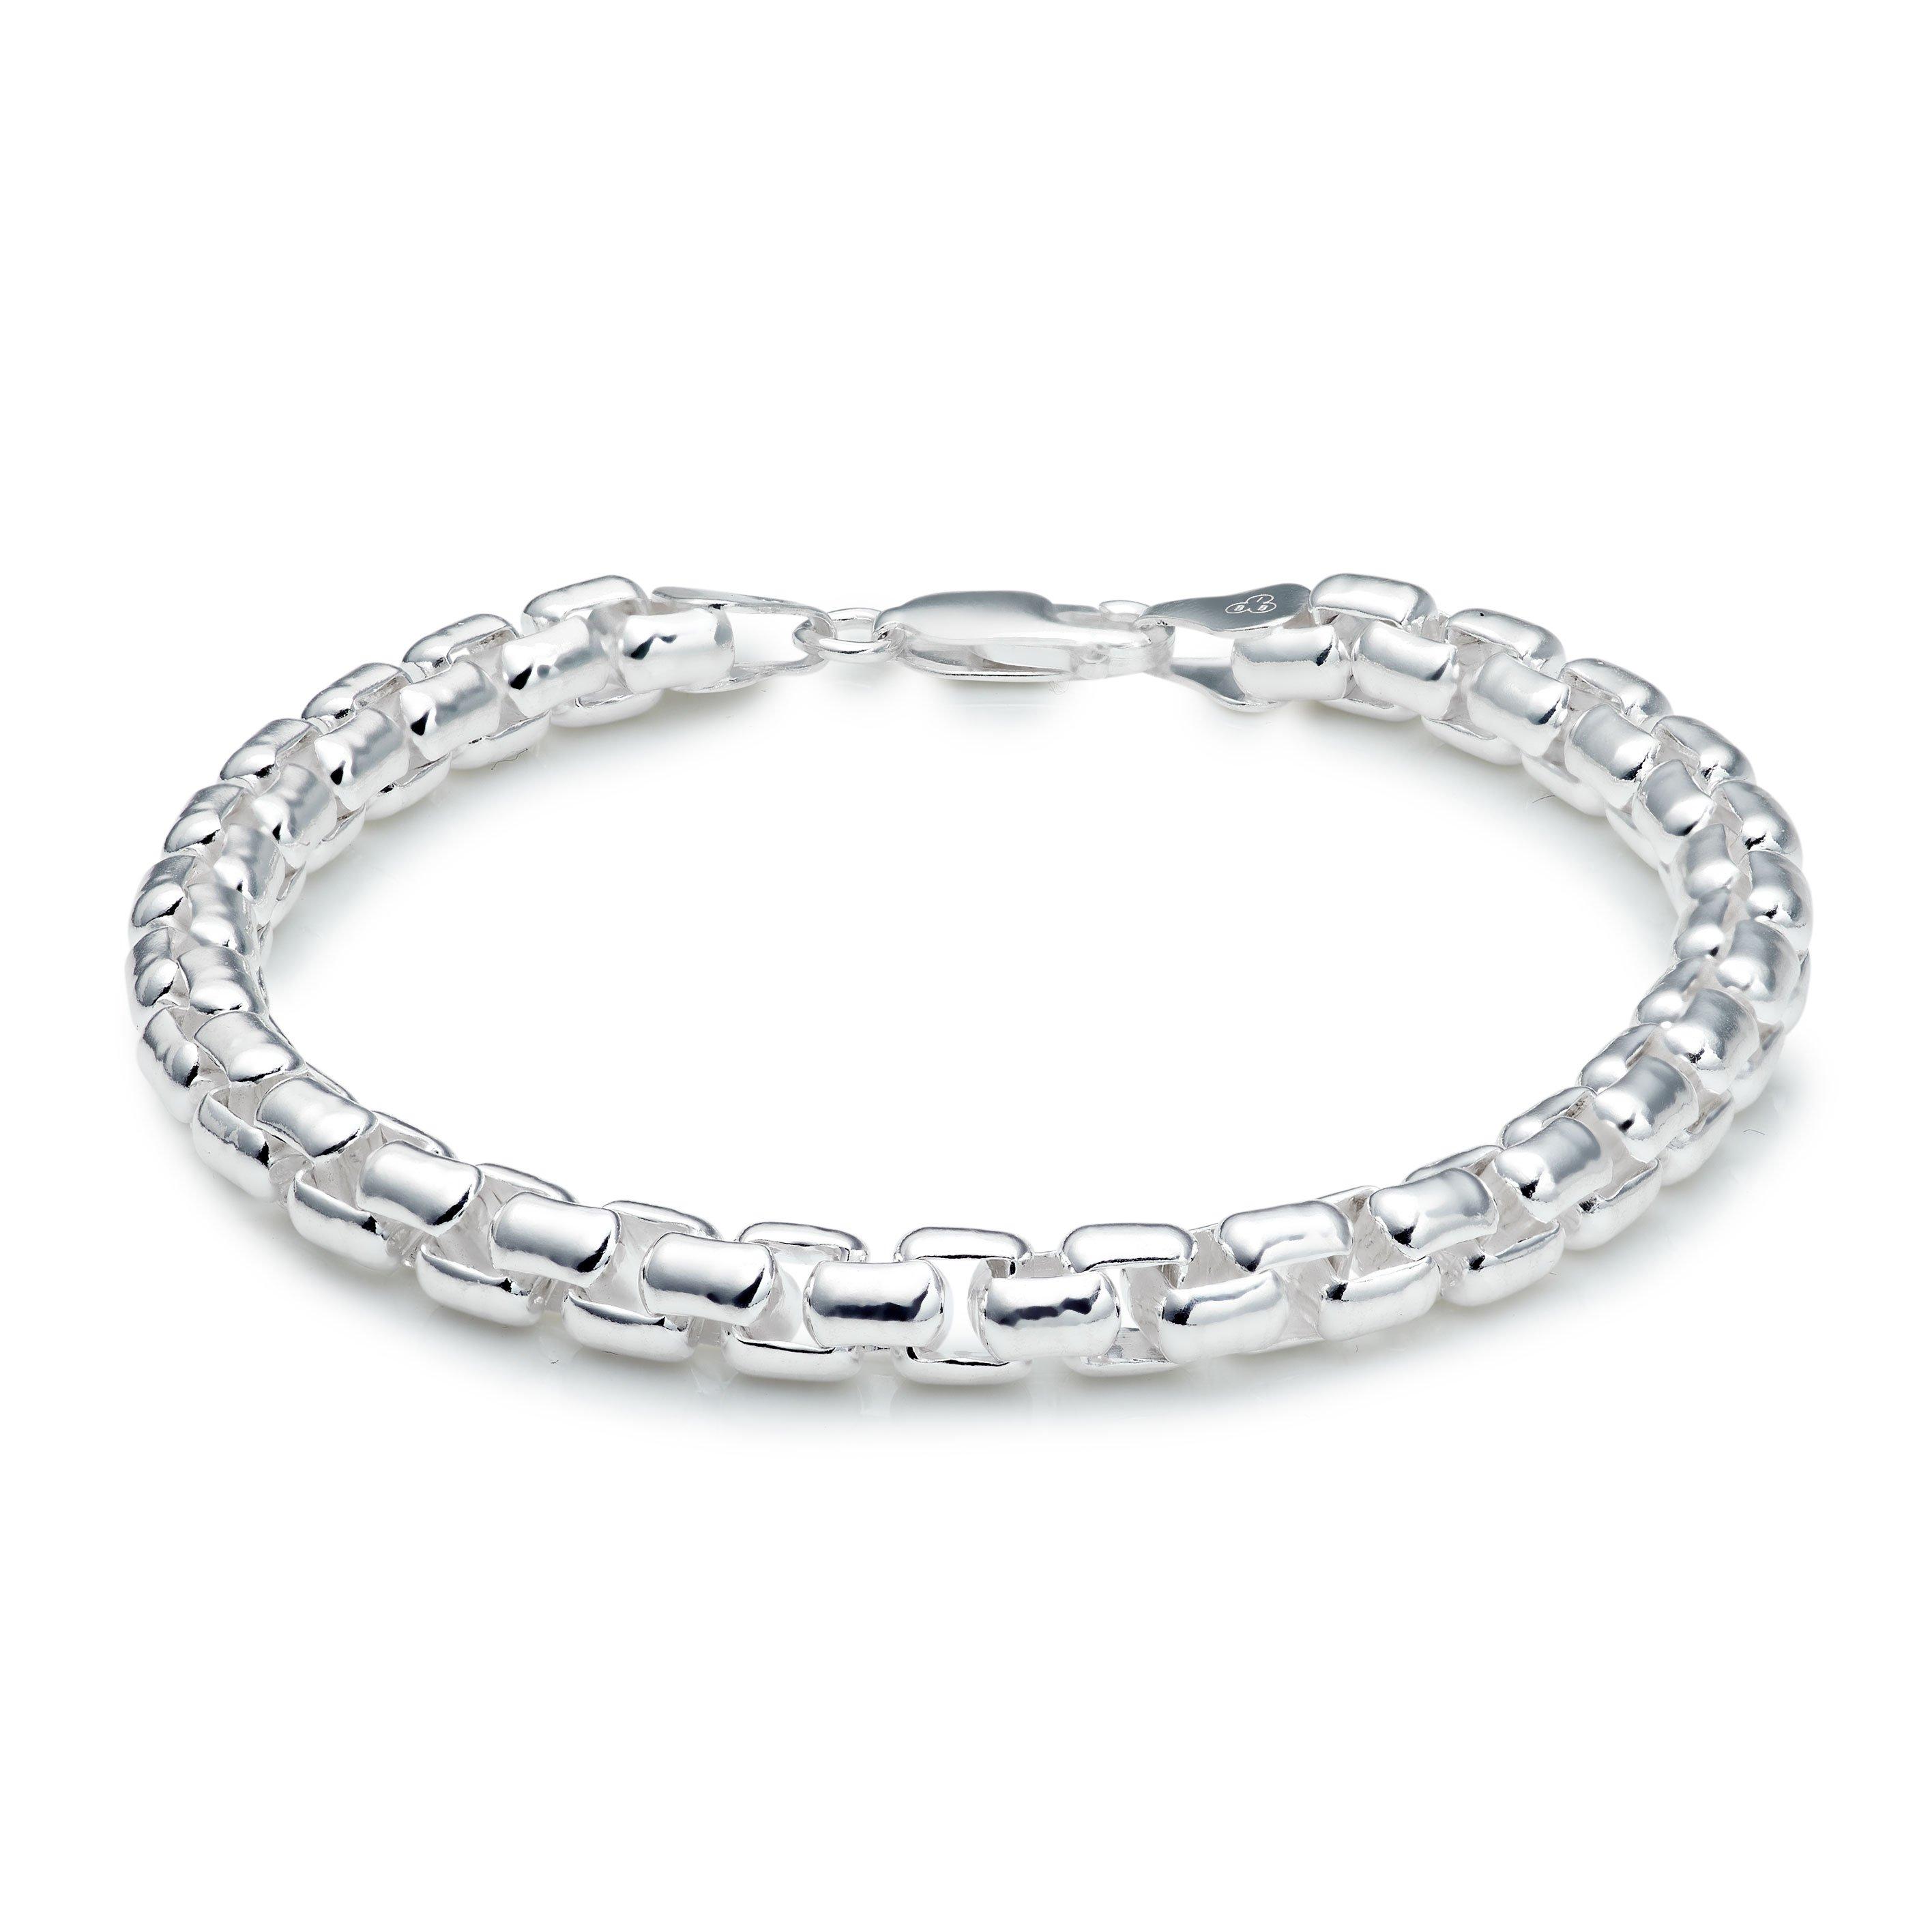 Silver Box Chain Men’s Bracelet | 0133900 | Beaverbrooks the Jewellers